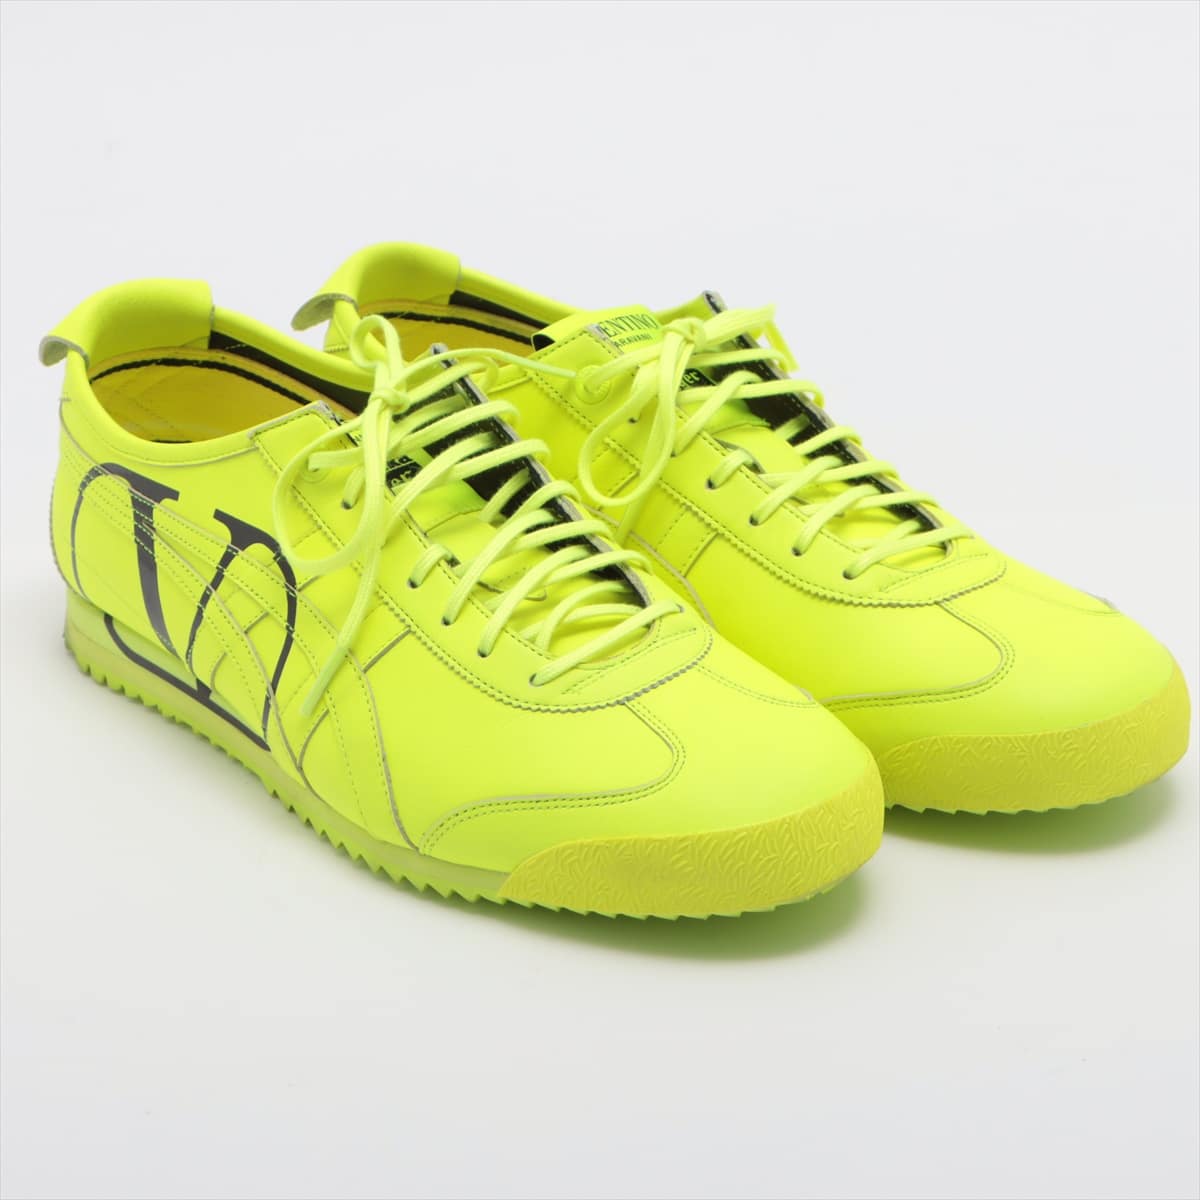 Valentino Garavani x Onitska Tiger Leather Sneakers 27.0㎝ Men's Yellow